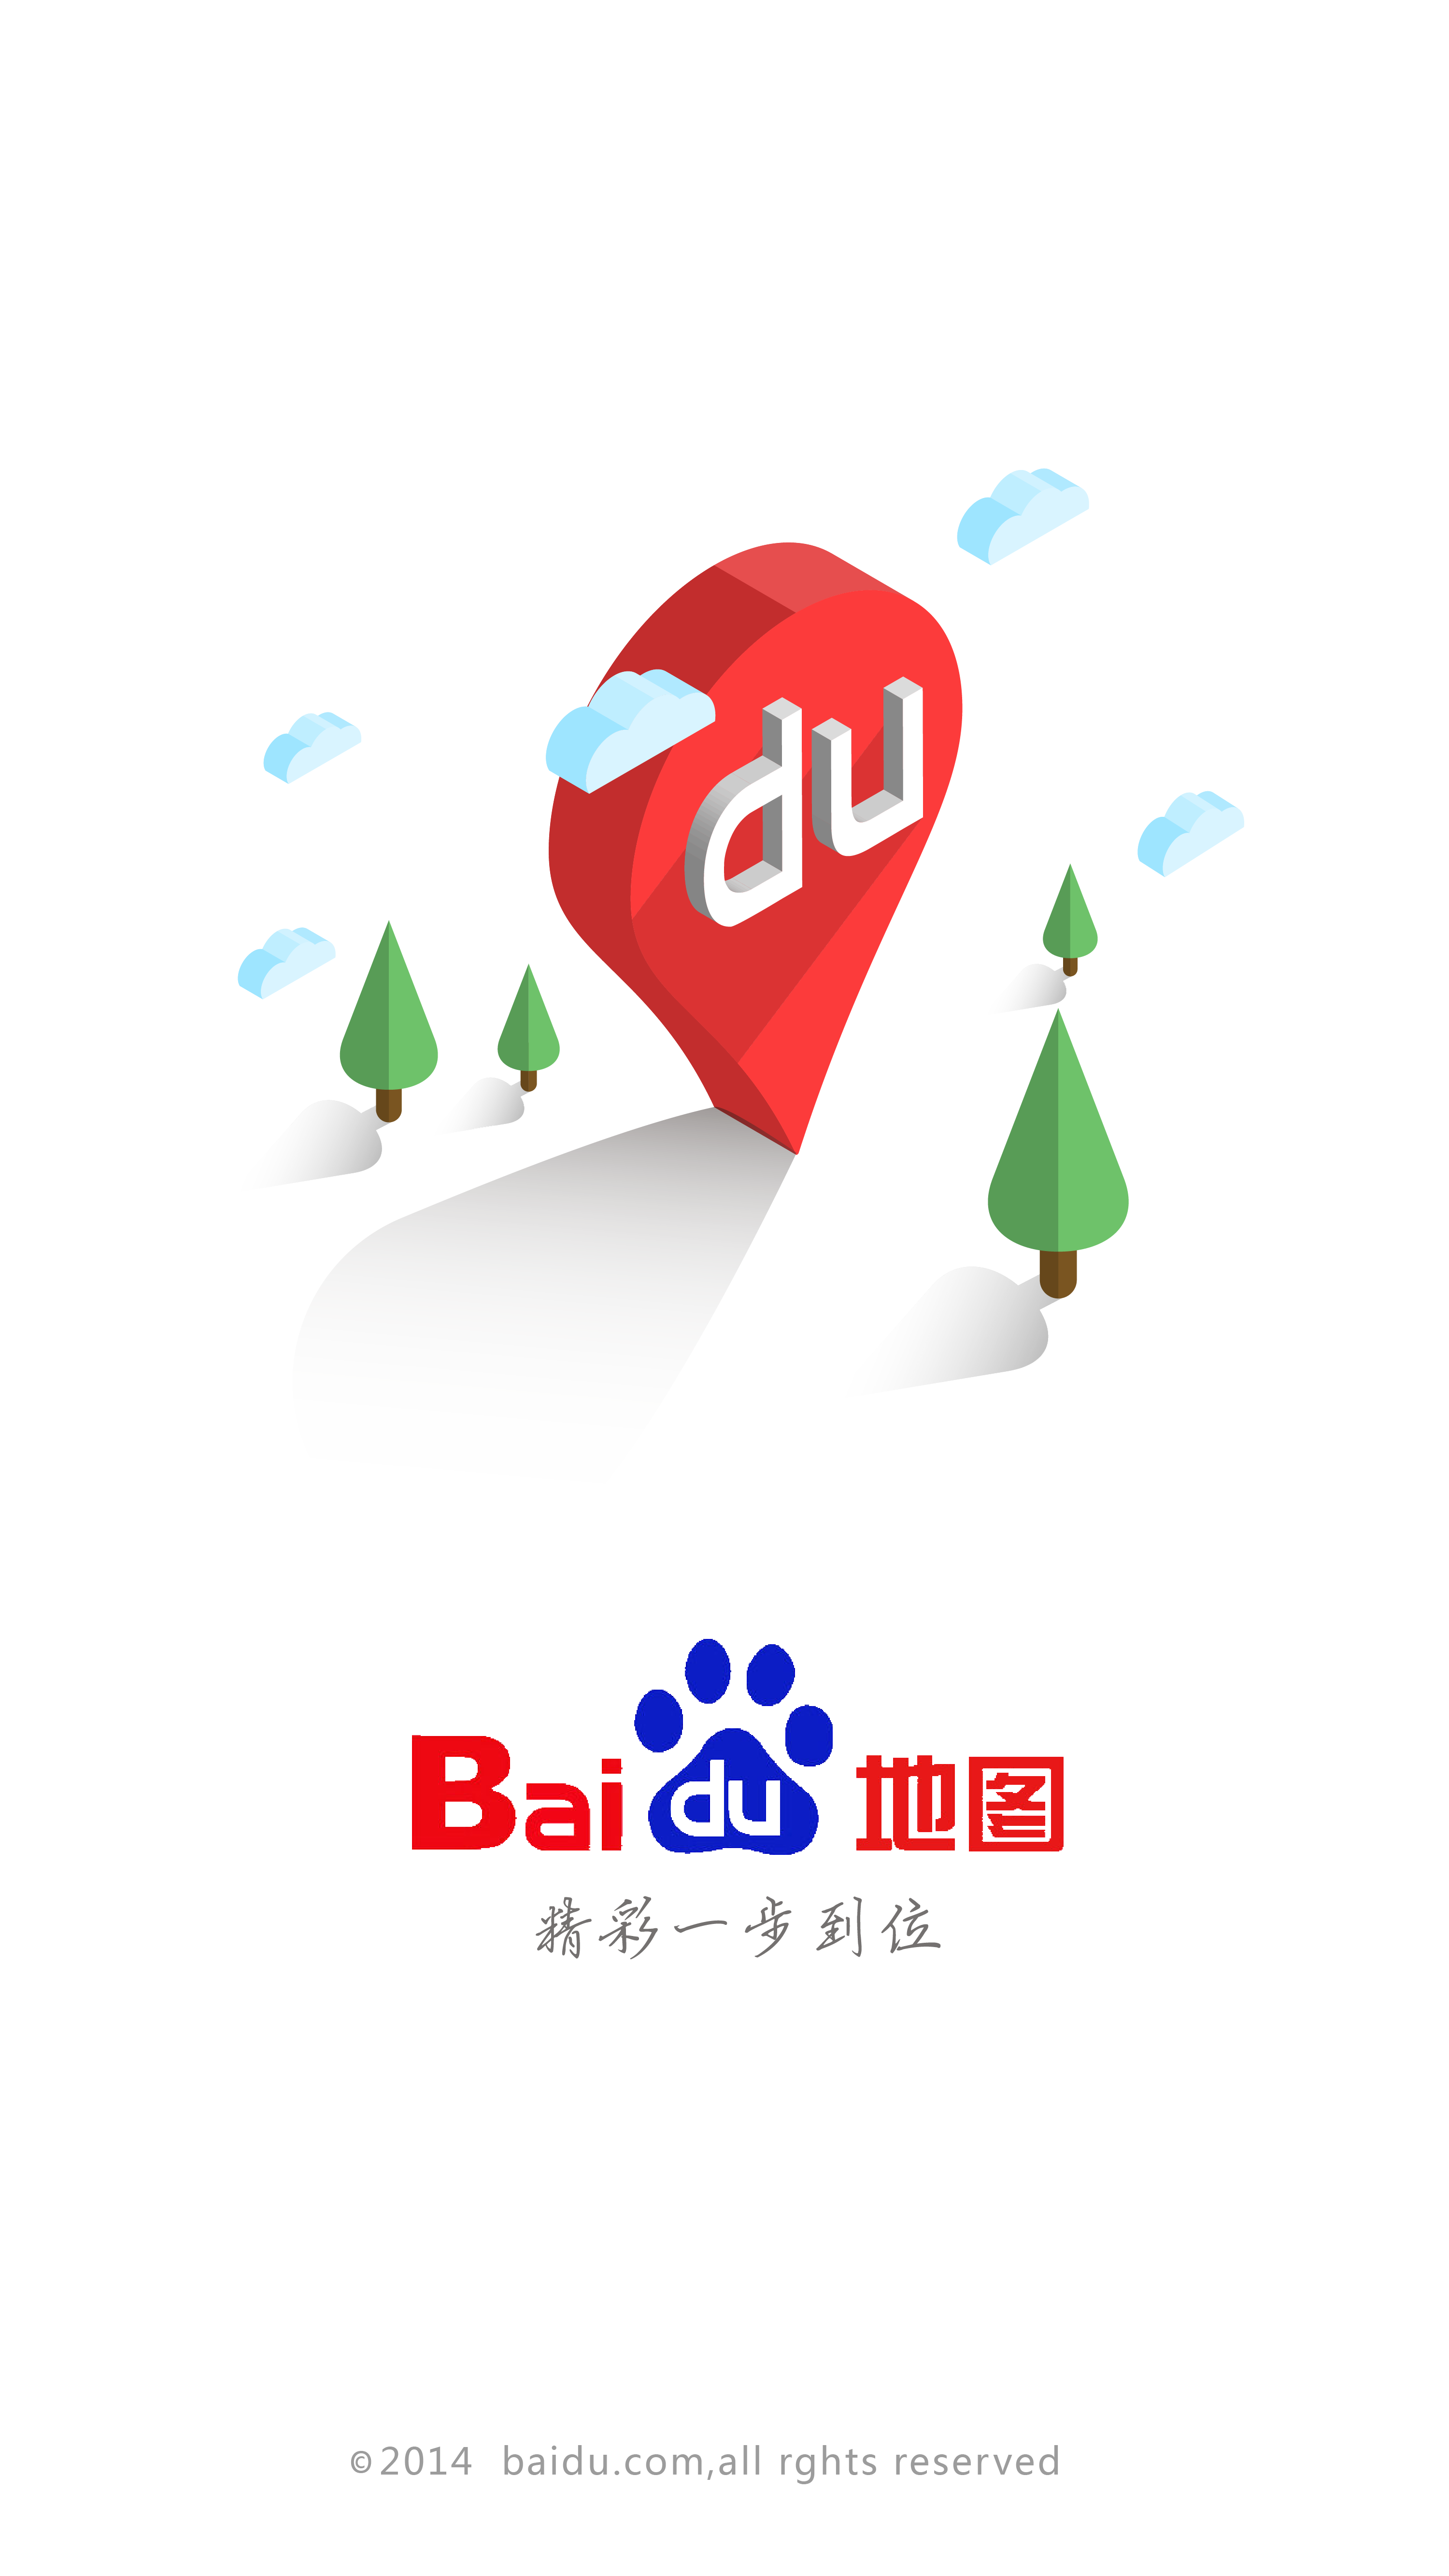 Bai百度应用app图片_图标元素_设计元素-图行天下素材网